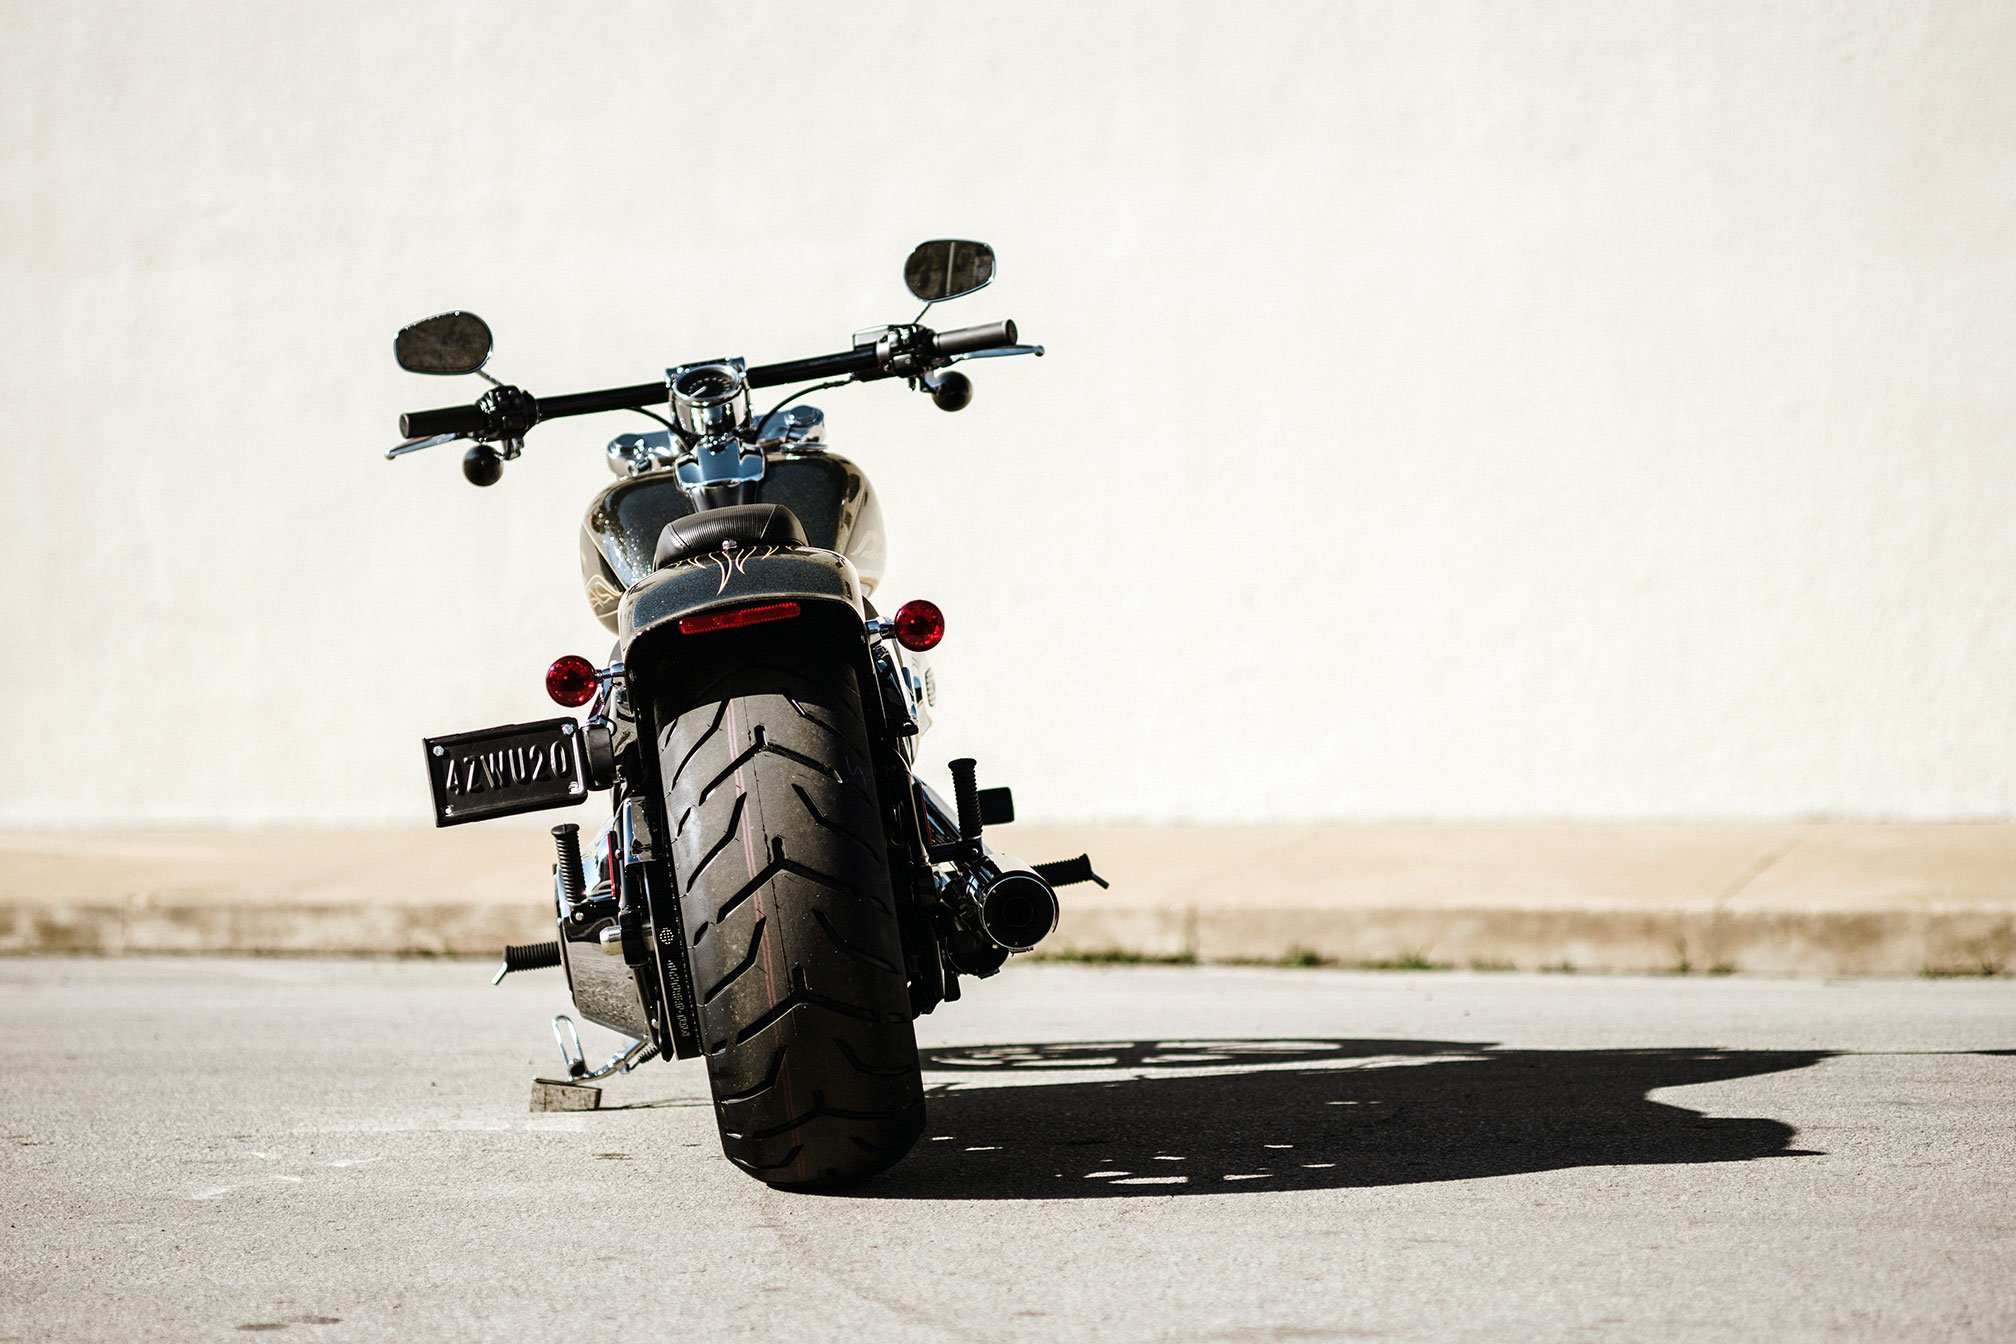 Harley Davidson Softail Breakout Motorbike Bike Motorcycle